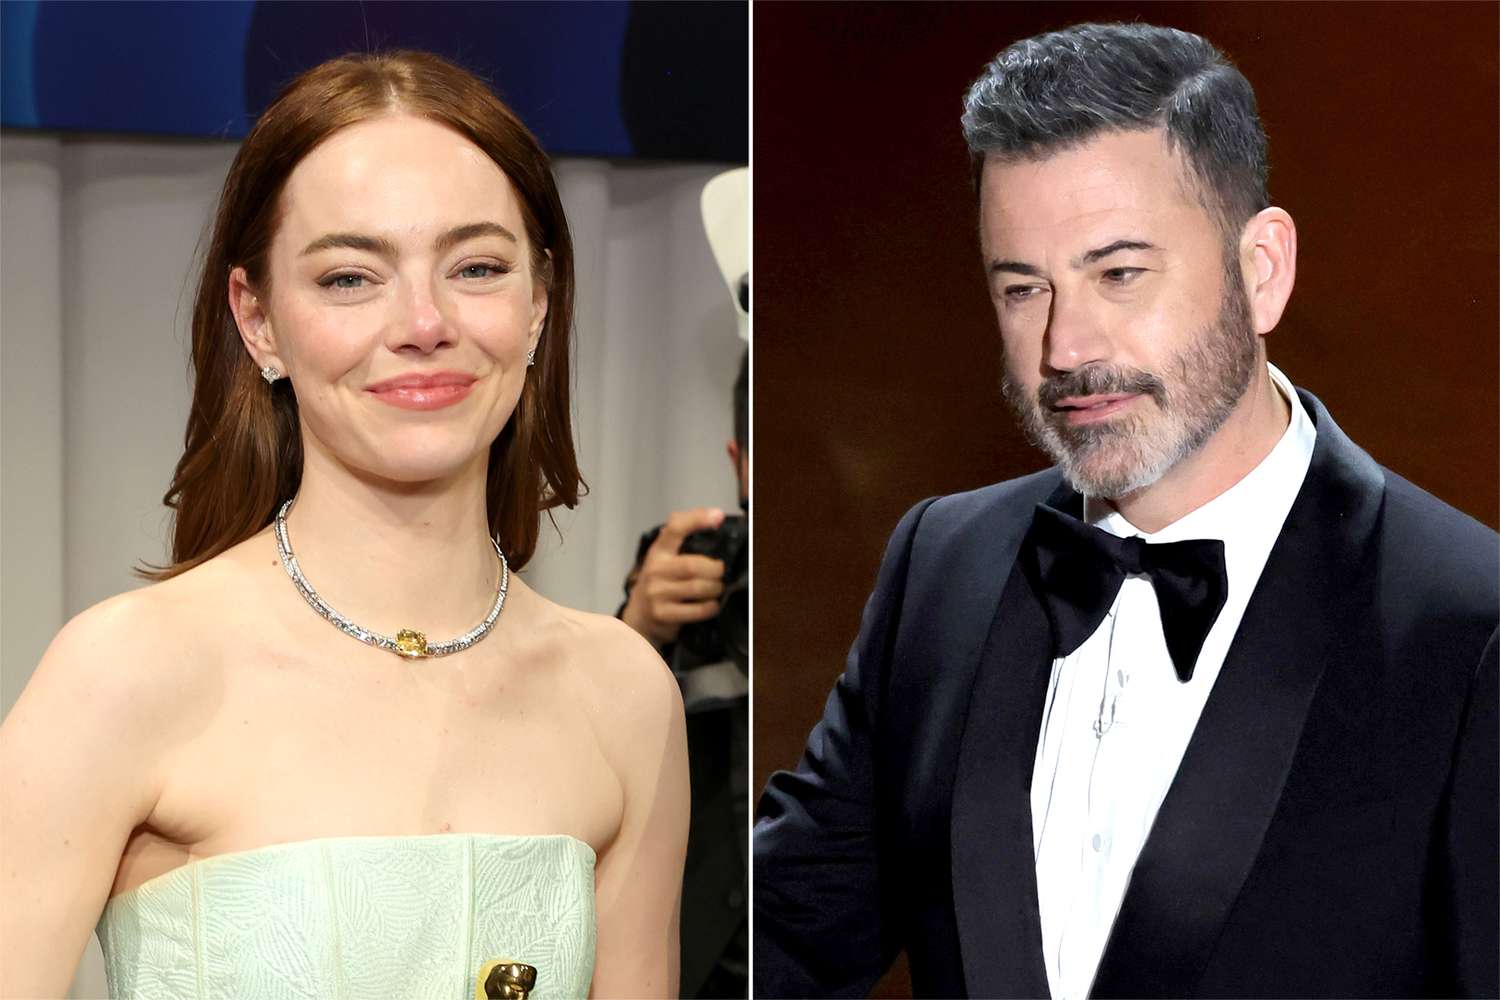 Emma Stone denies calling Jimmy Kimmel a 'prick' over Oscars joke: 'I wasn't upset with him at all'